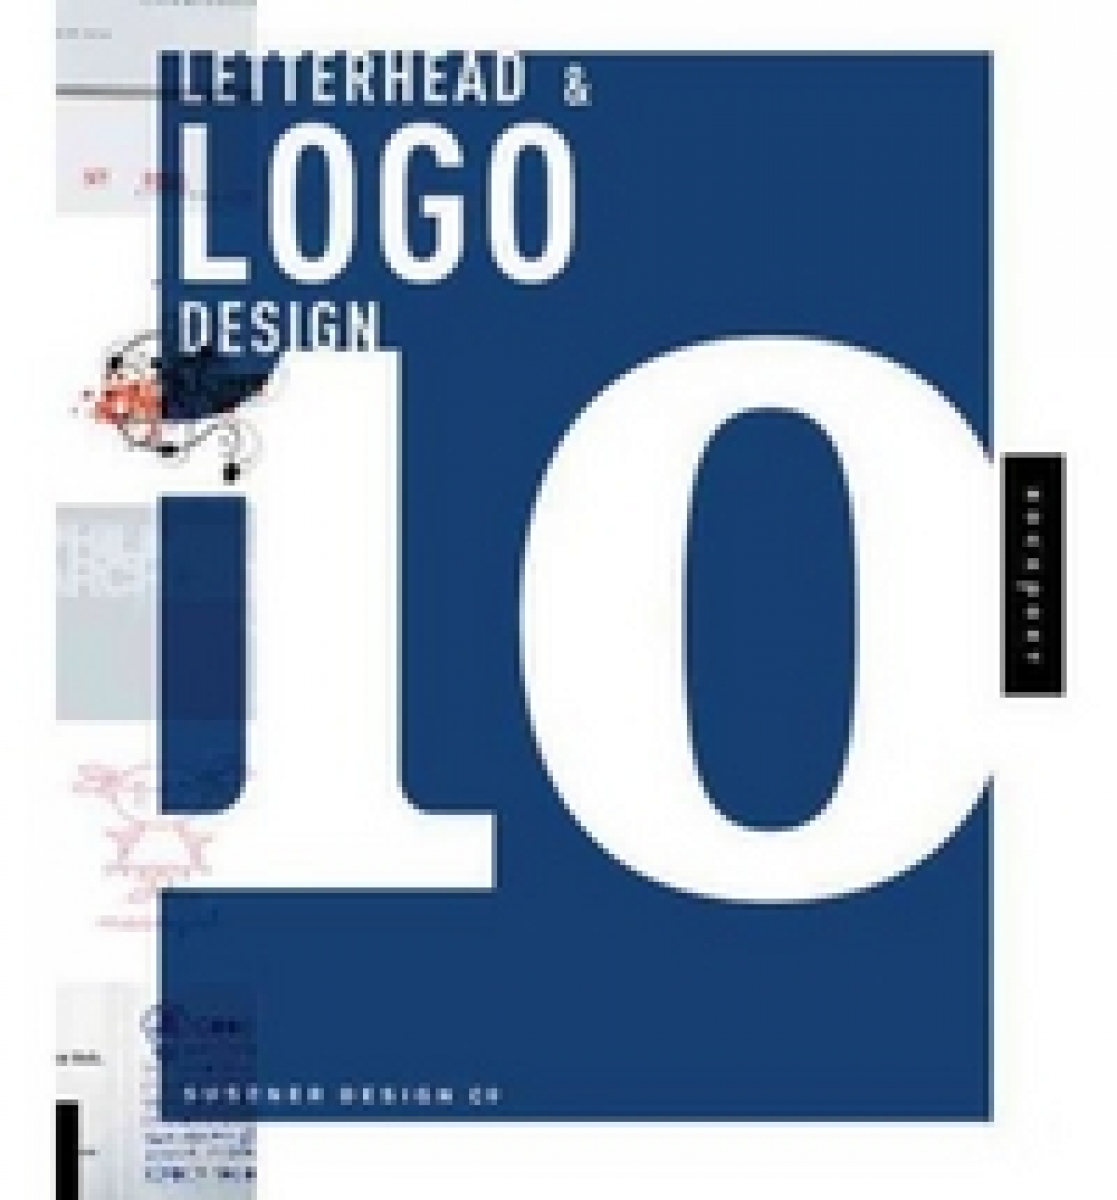 Sussner D.C. Letterhead Logo Design 10 (Letterhead and Logo Design) 